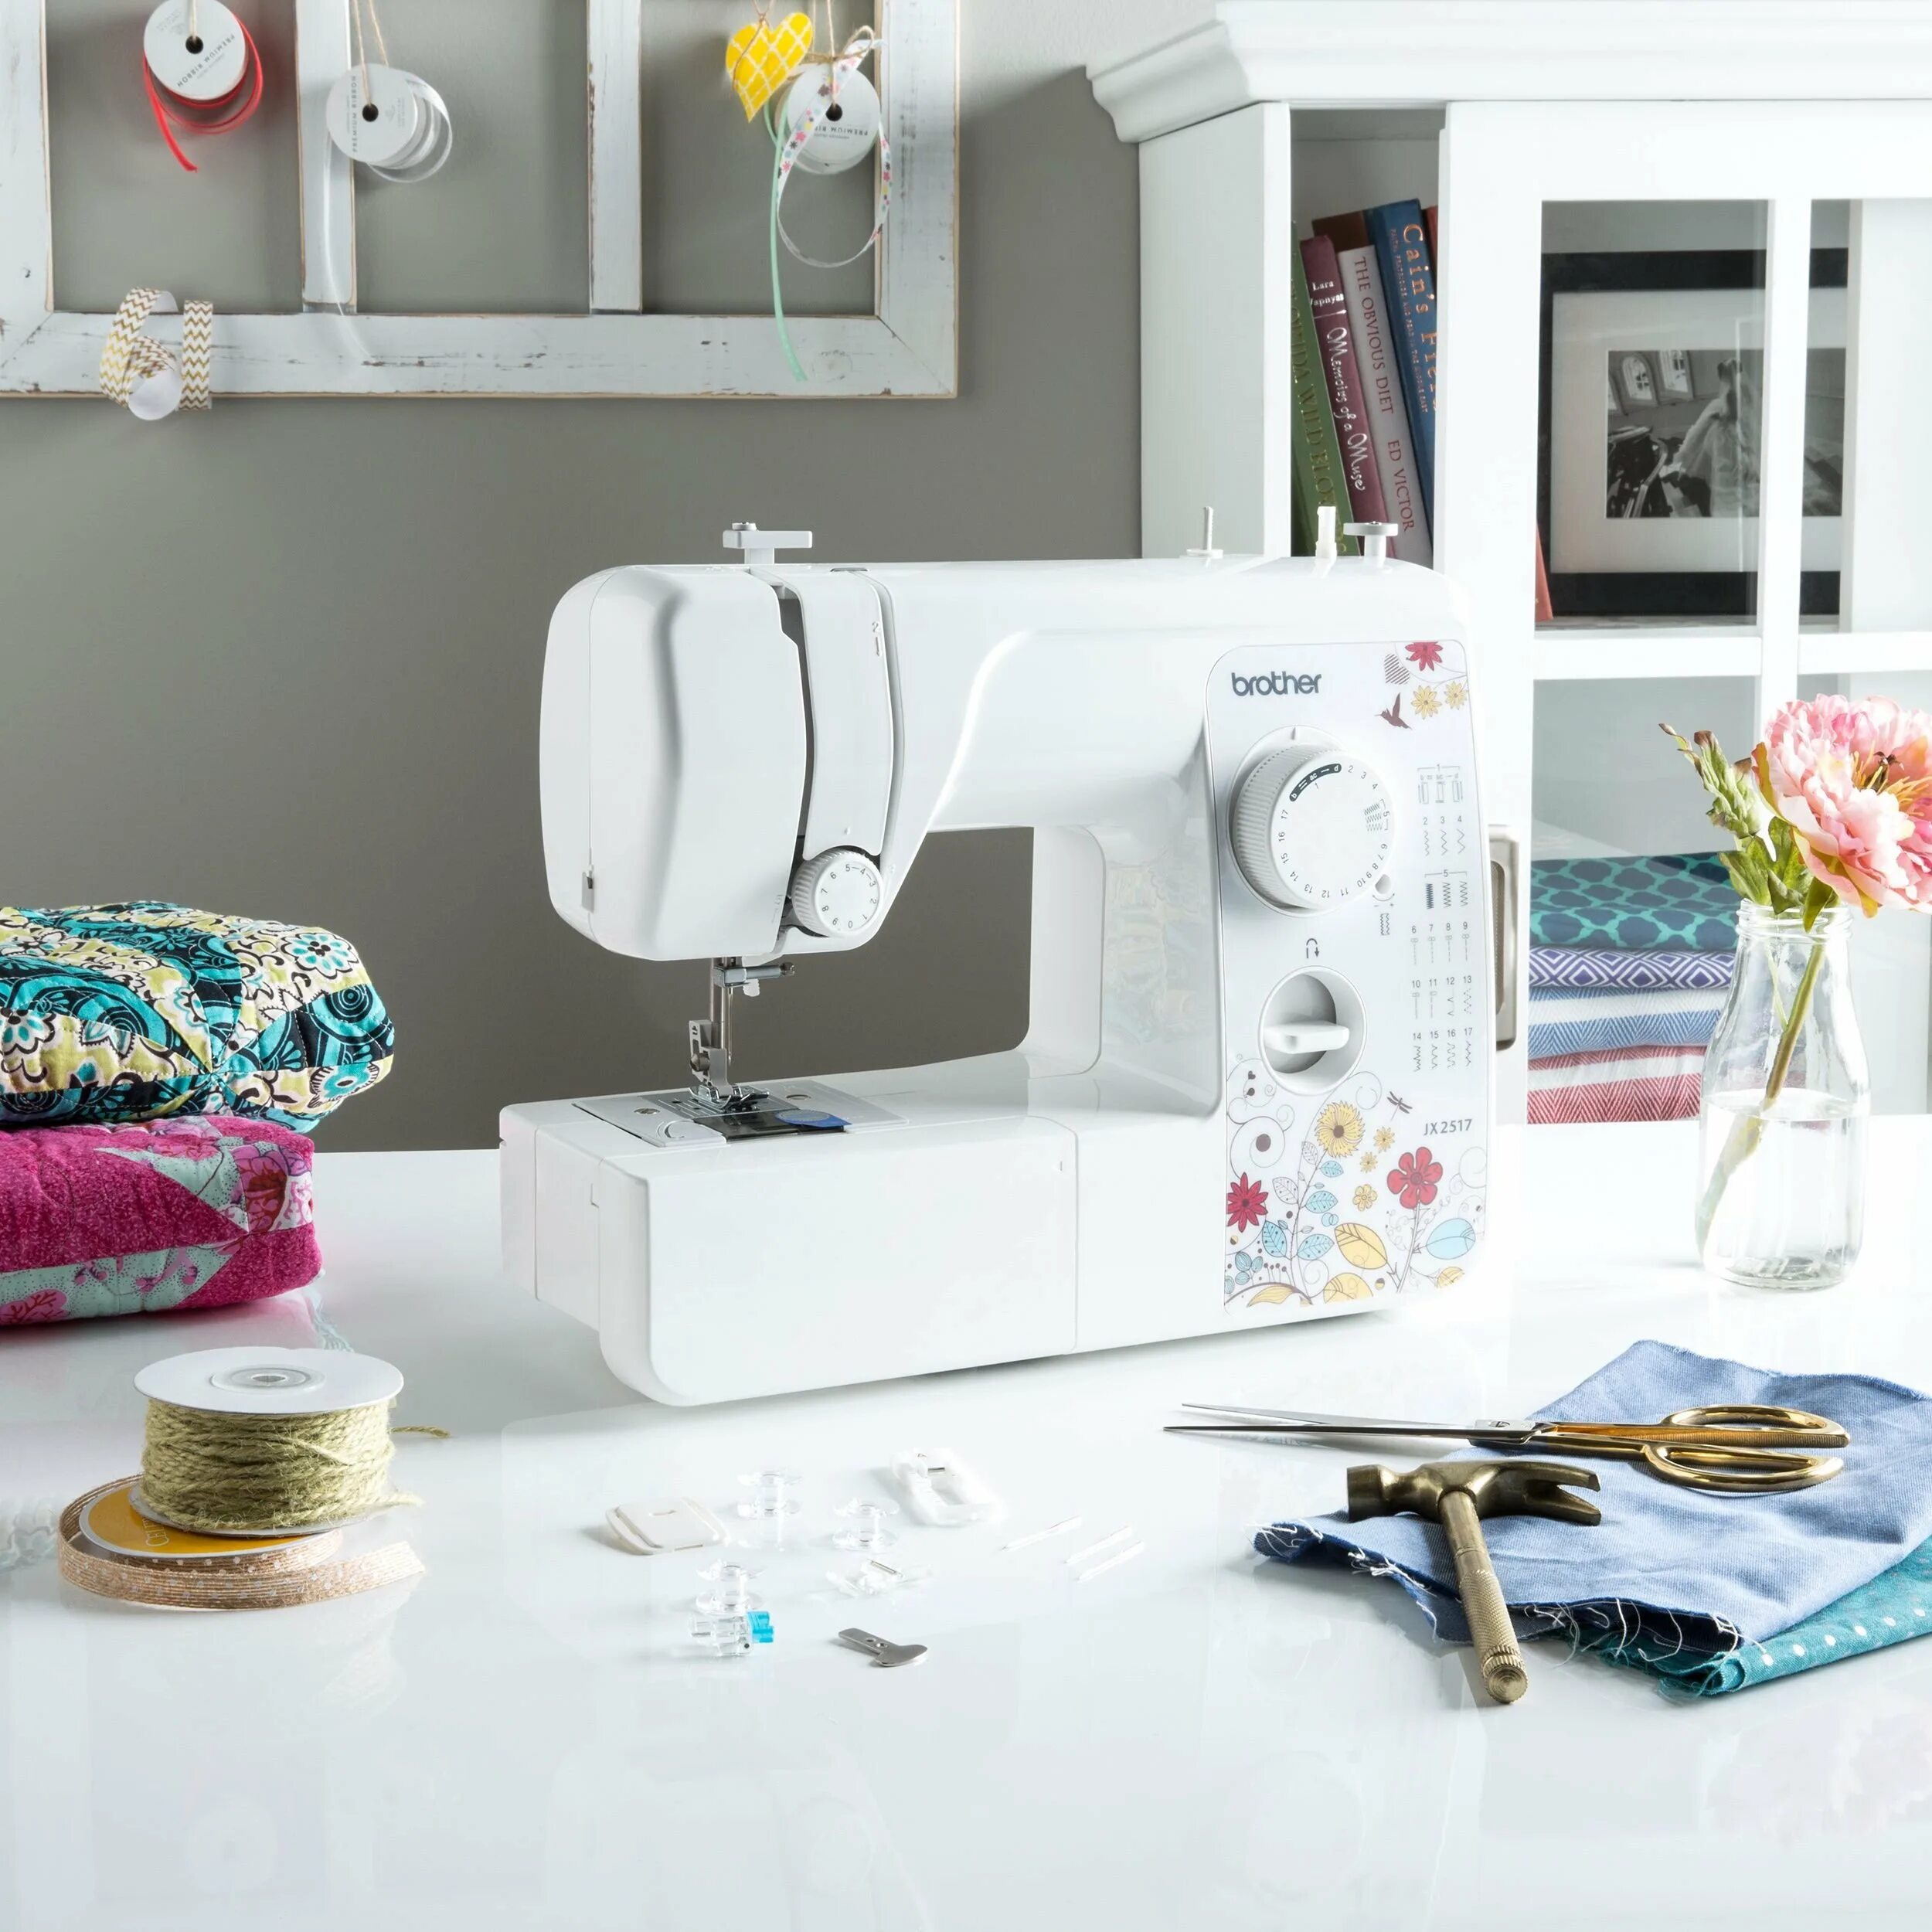 Швейная машина Sew & Sew. Easy Stitch швейная машинка. Швейная машинка Фэмили. Швейная машина homestore hs893. Сон швейная машинка